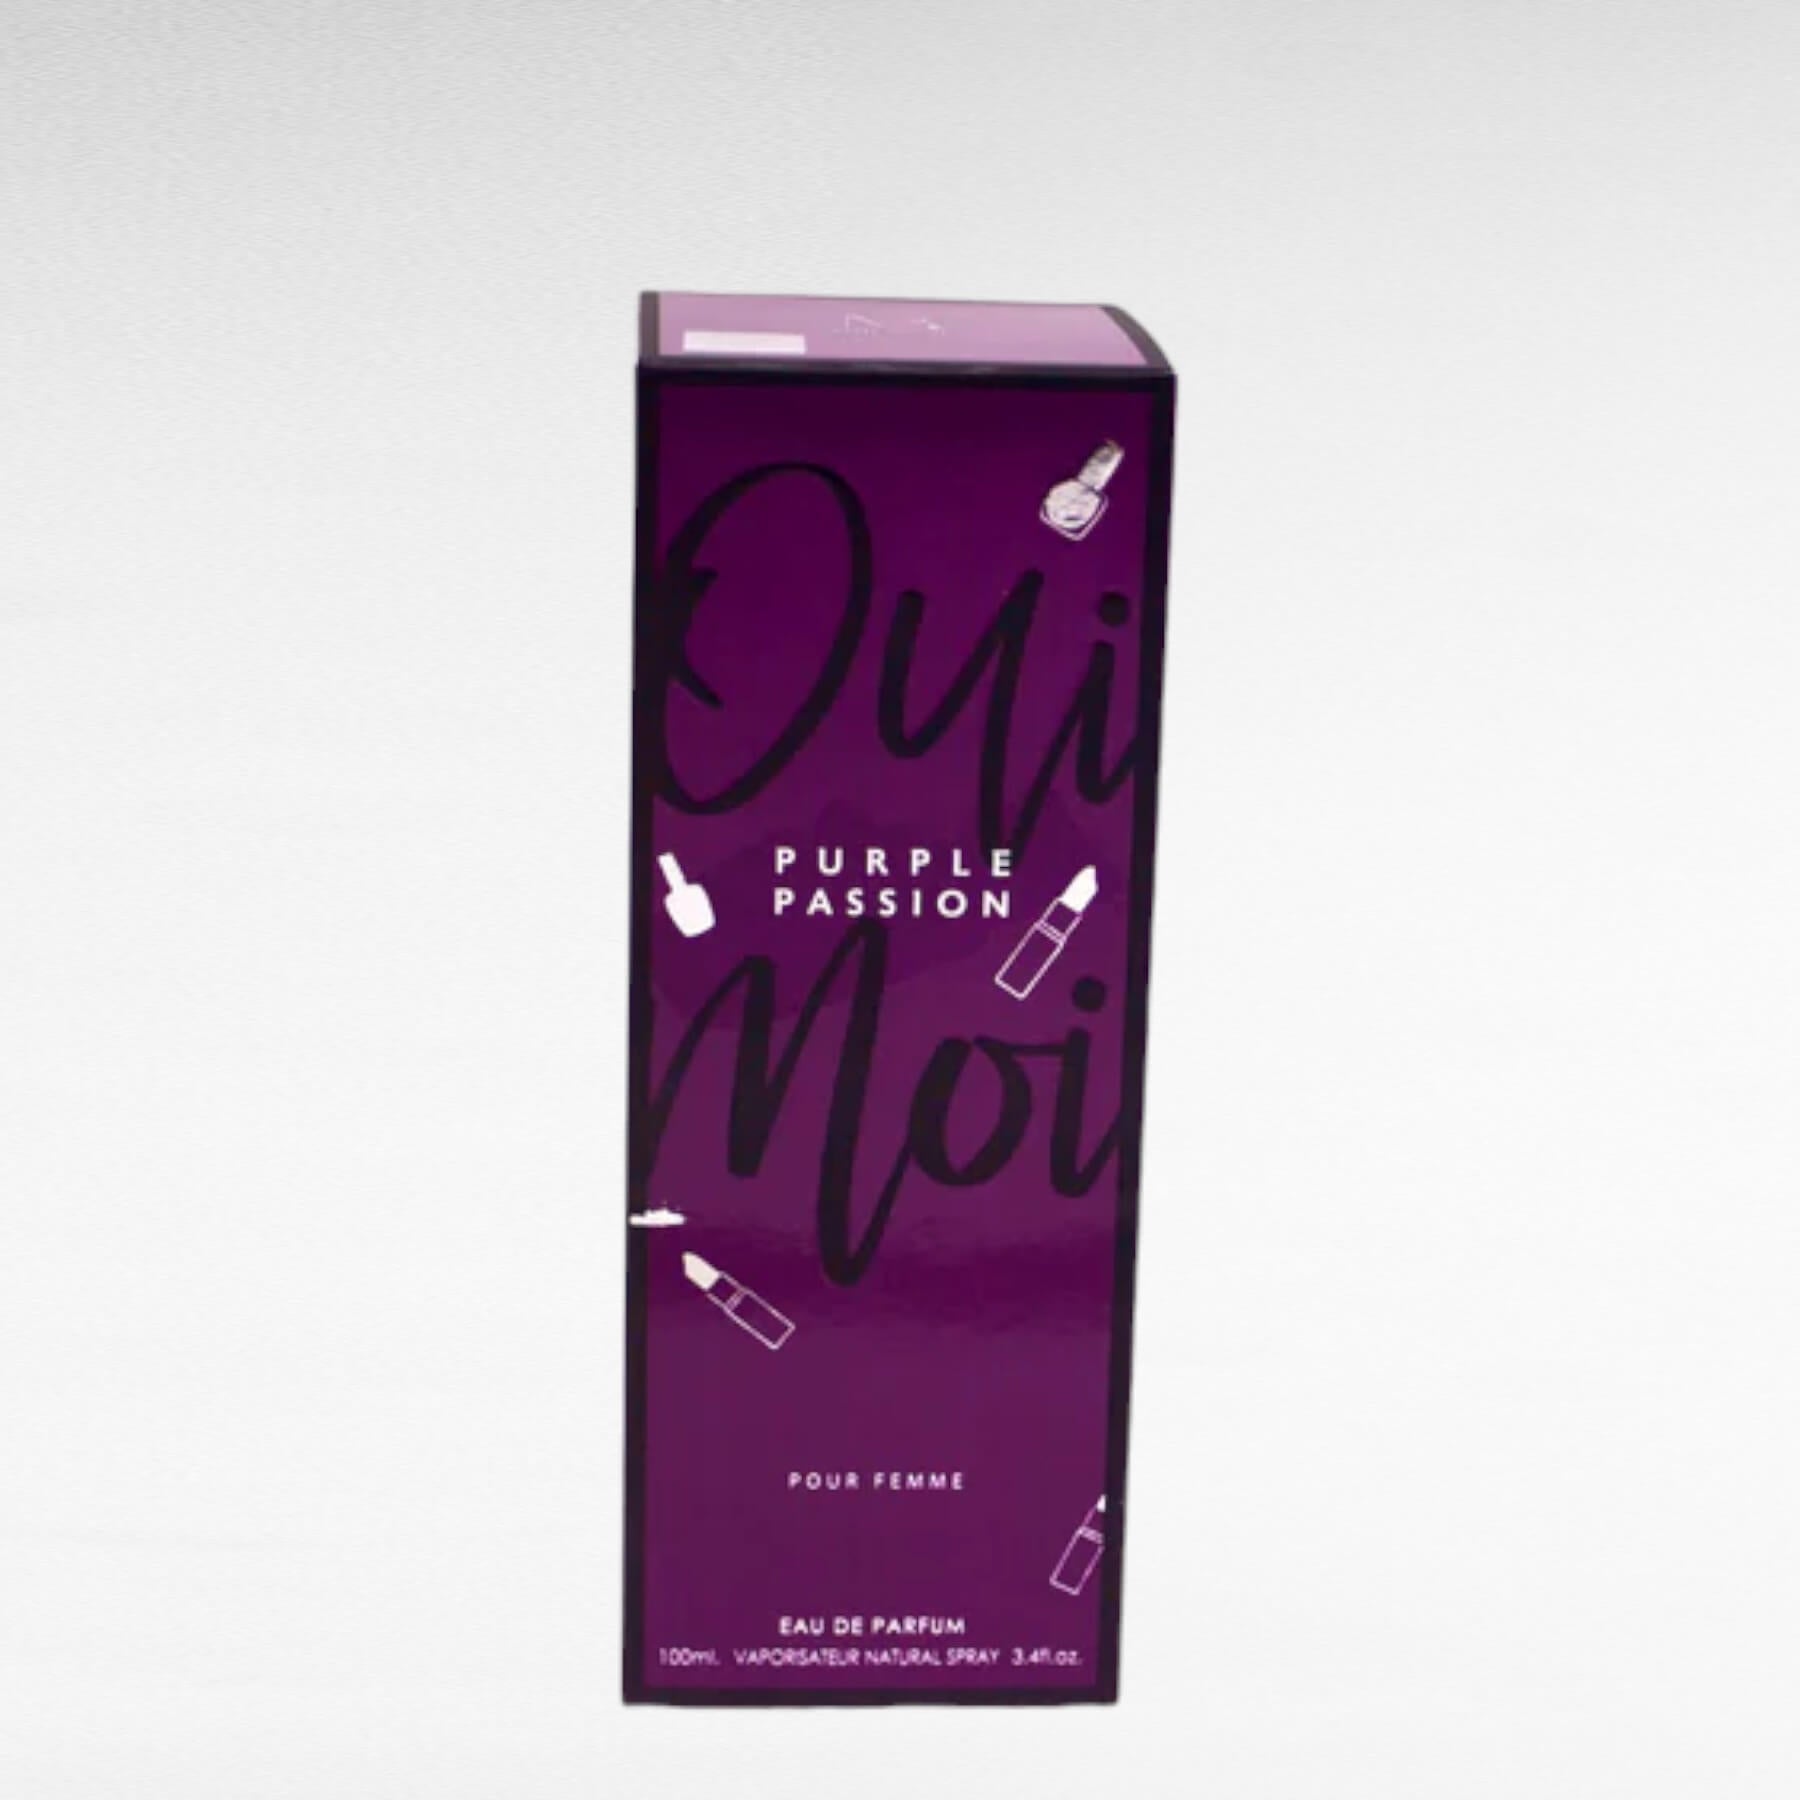 alt=" Perfume 0ui Moi Purple Satin Mirage Feminino - embalagem roxa"